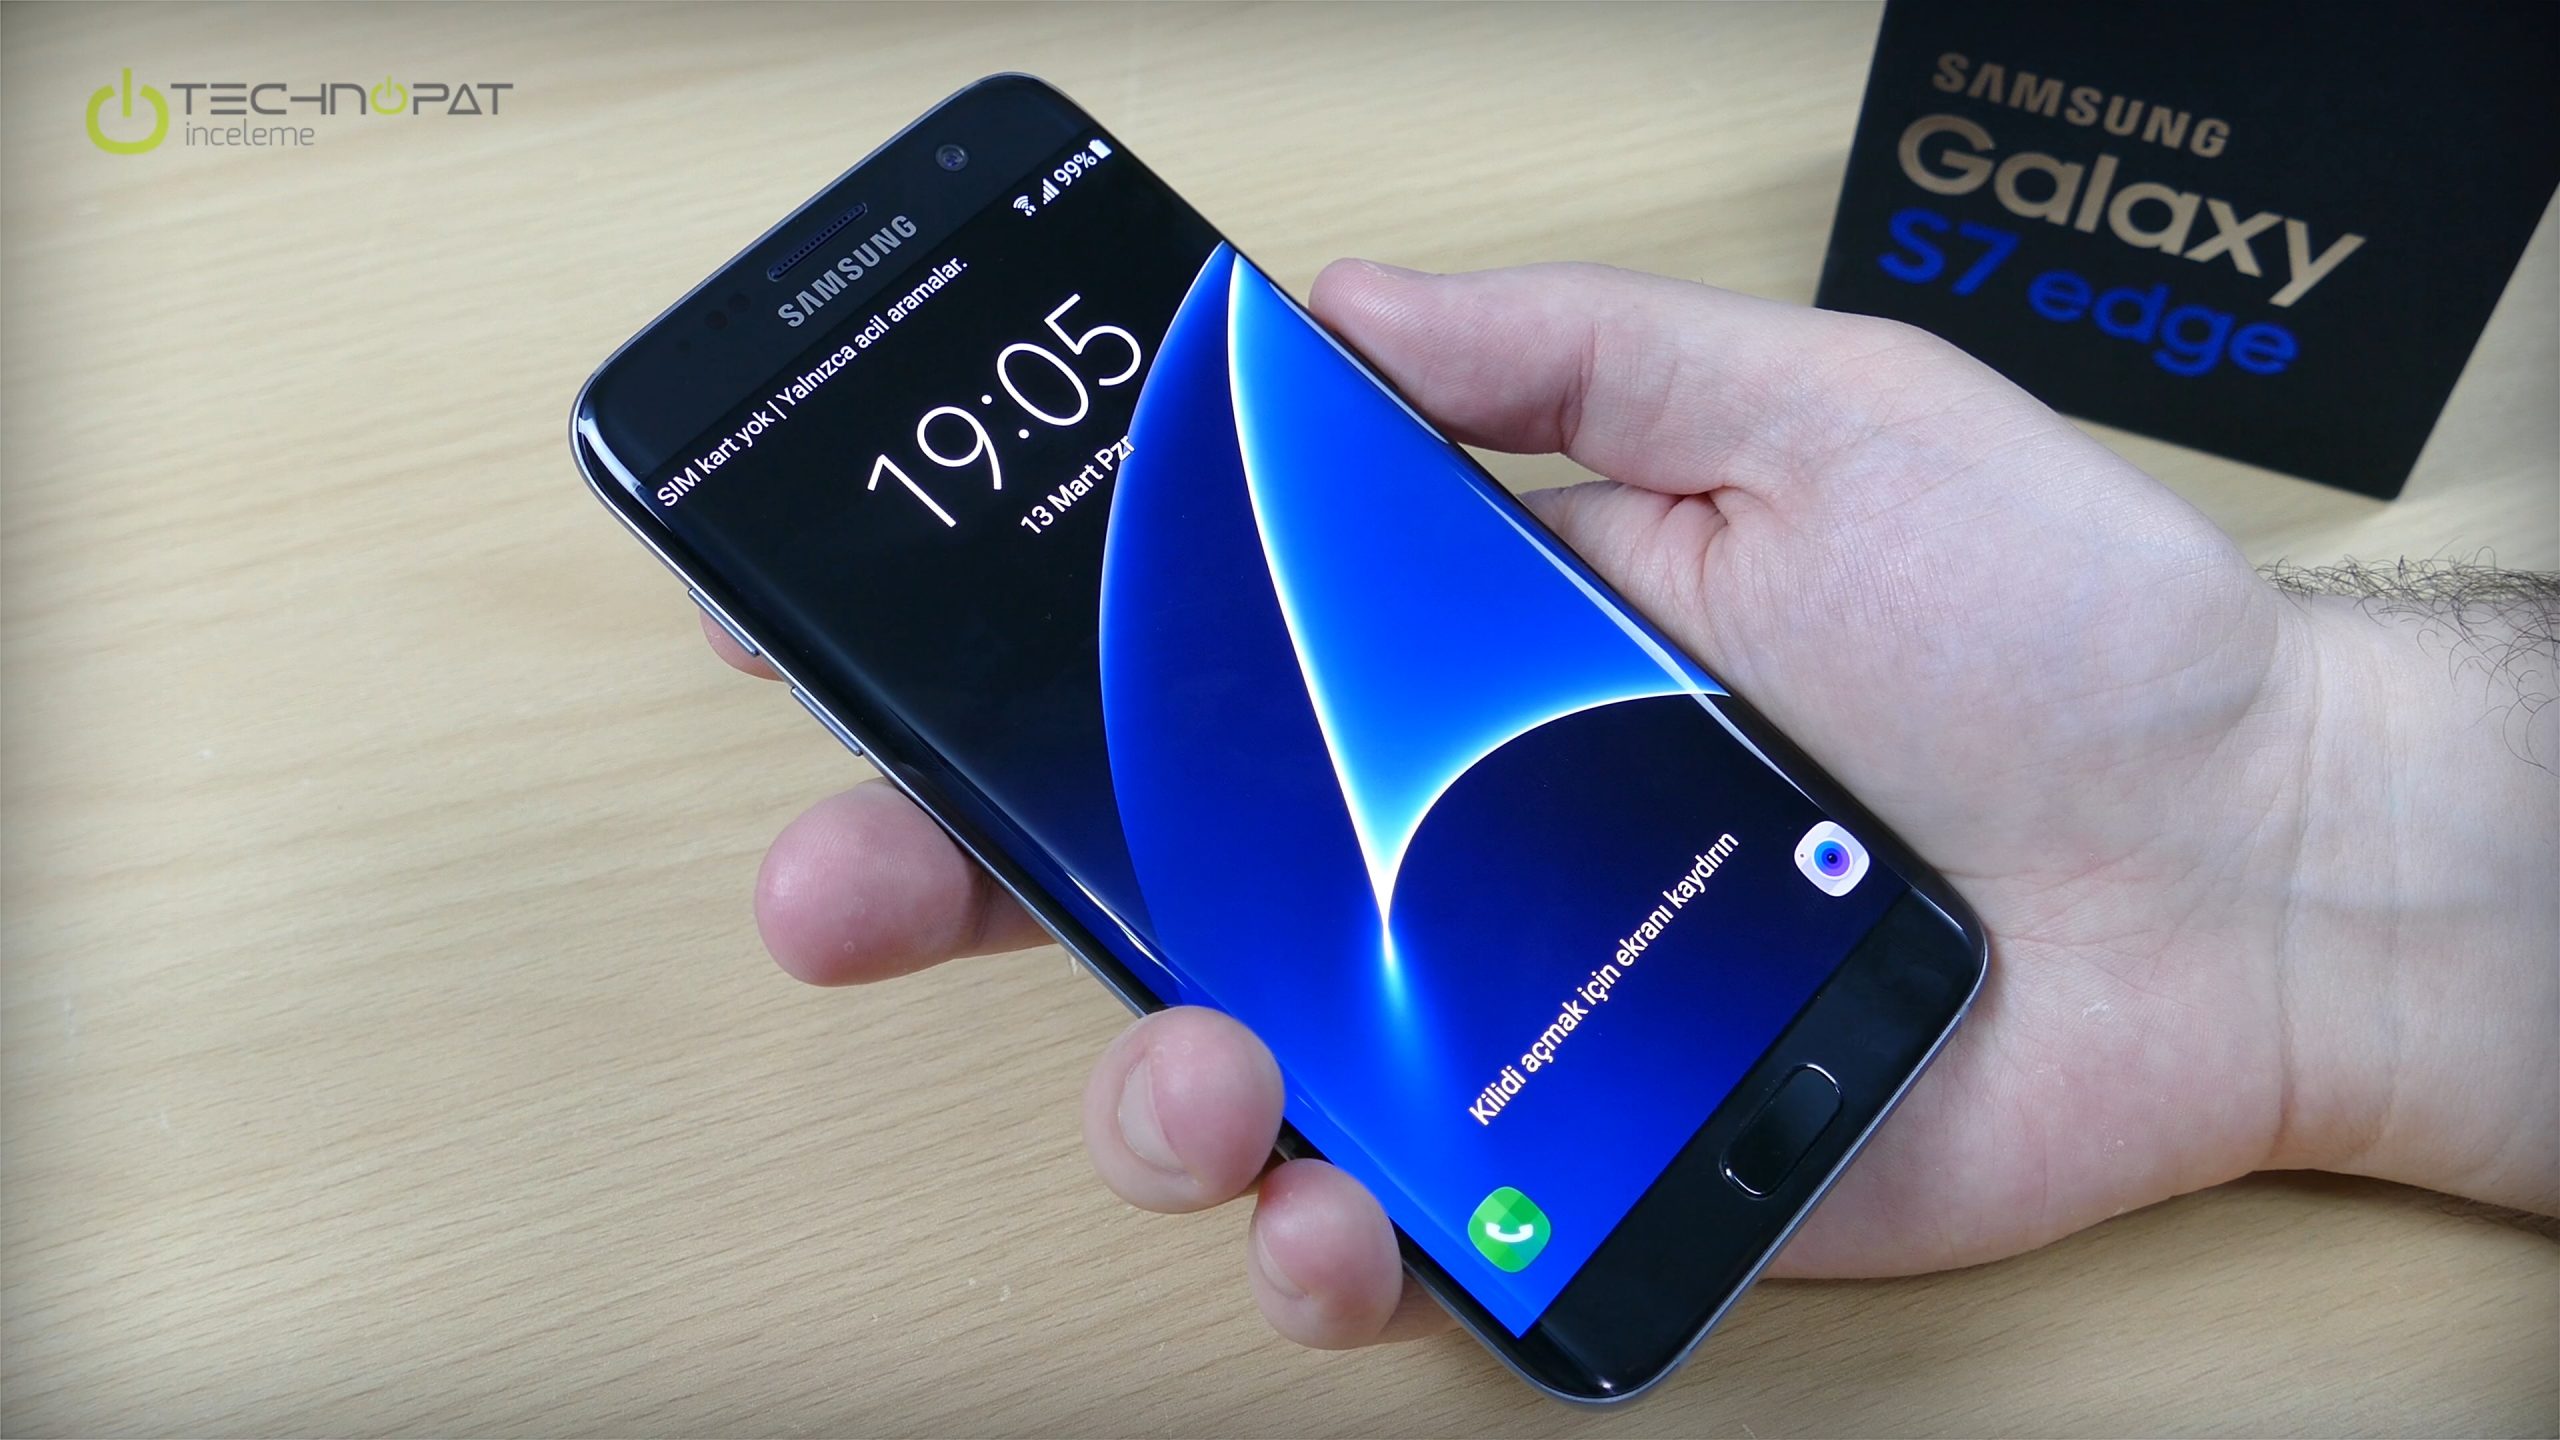 Samsung Galaxy S7 Edge İncelemesi - Technopat